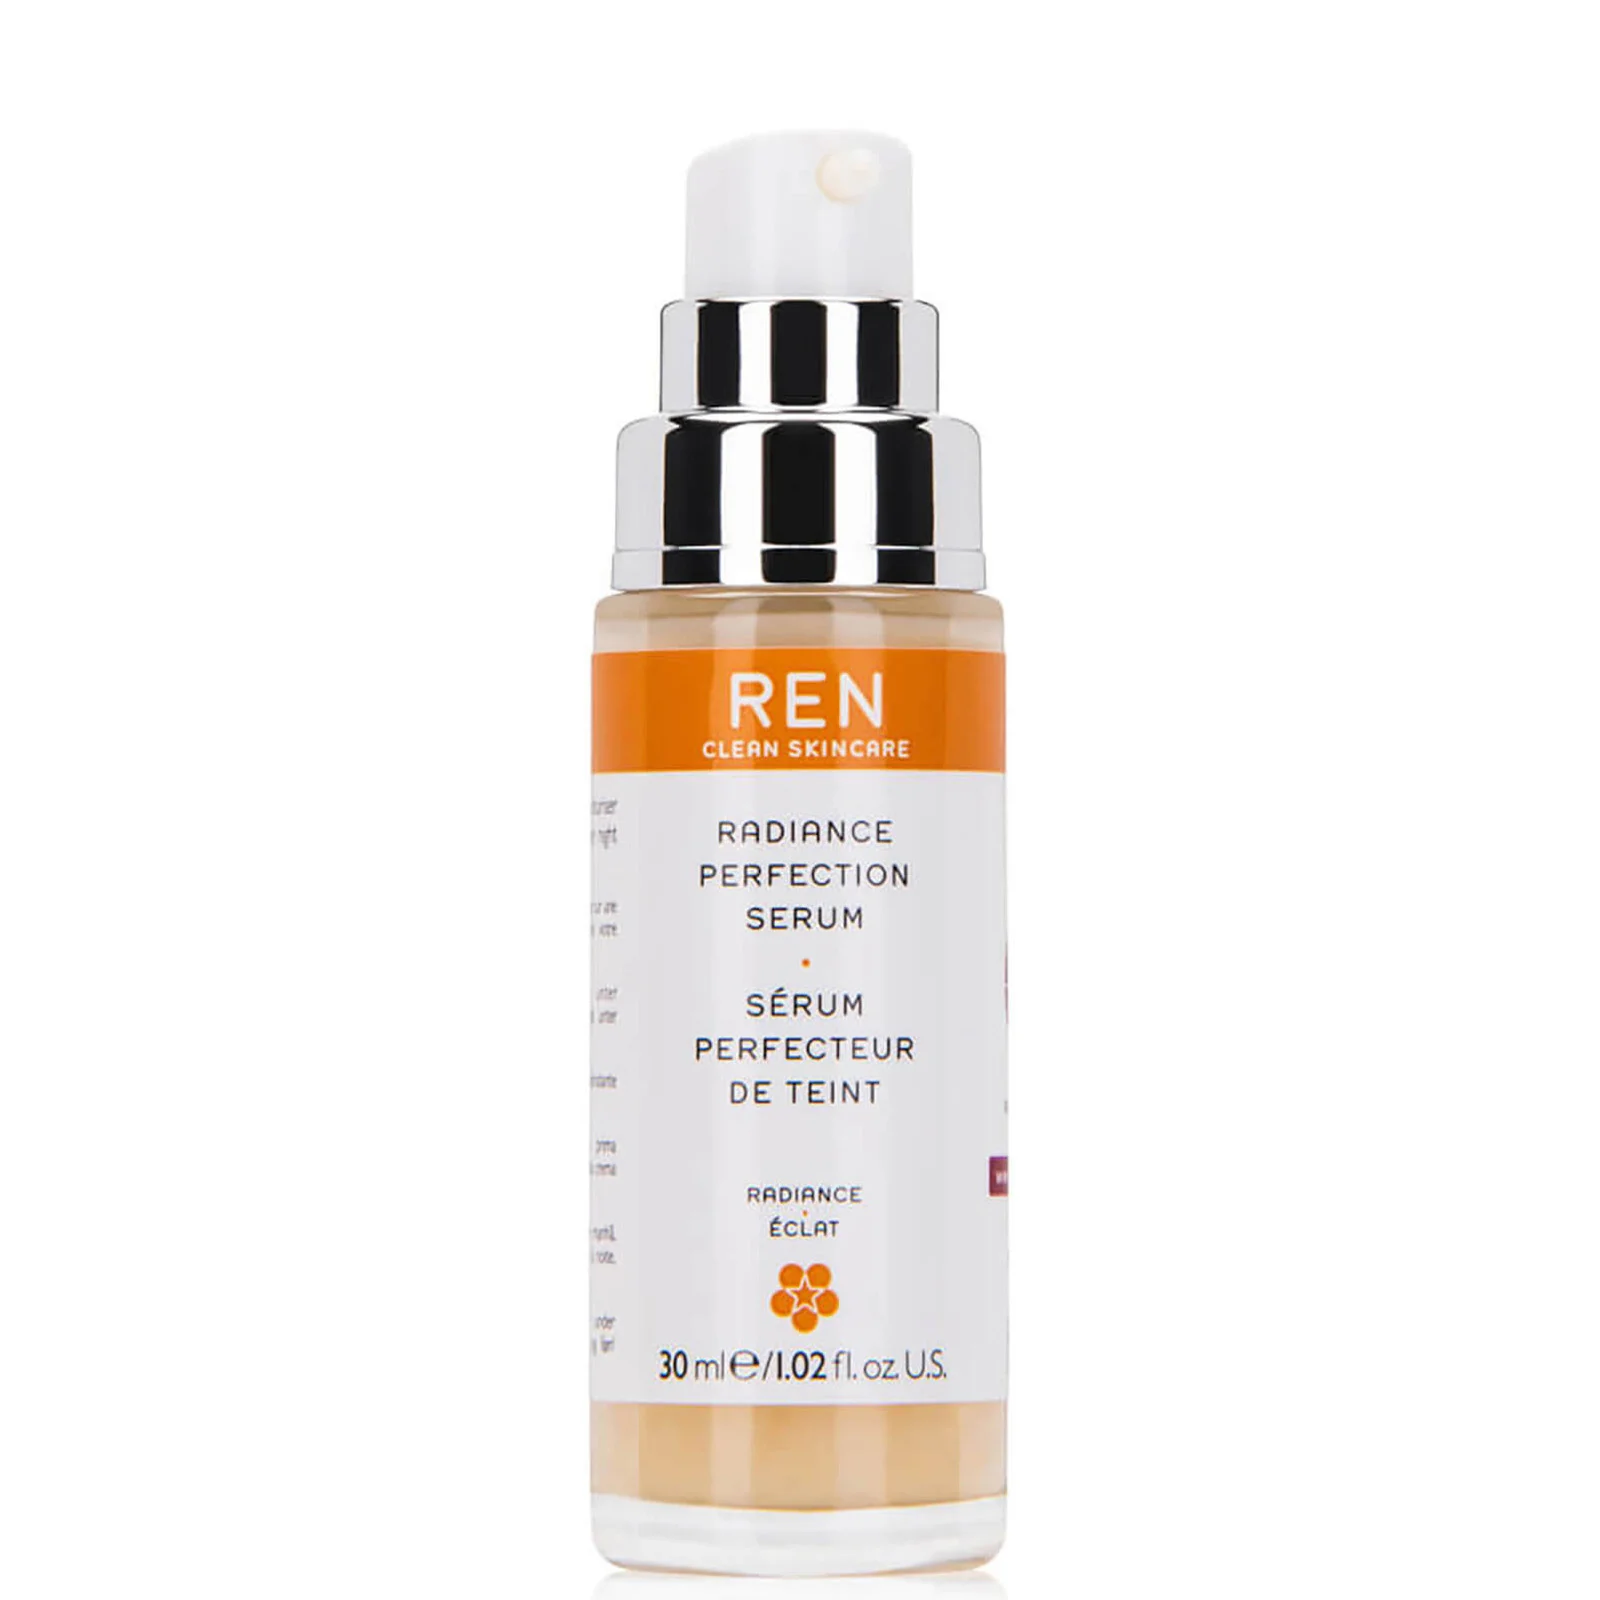 REN Clean Skincare Radiance Perfection Serum 30ml Image 1